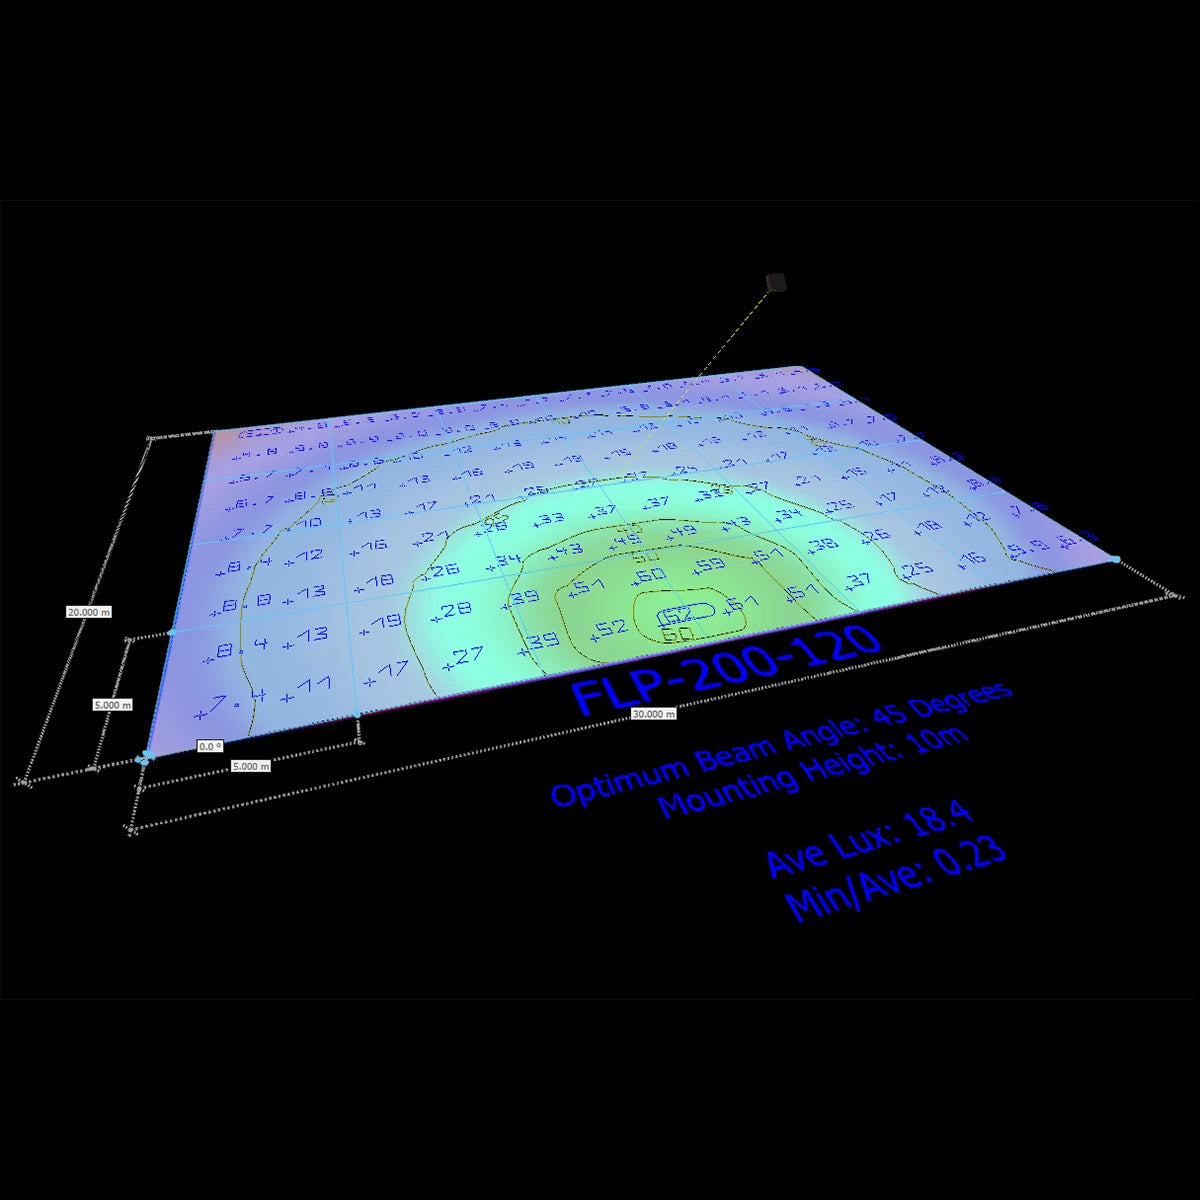 Lux level analysis of 200W LED flood light